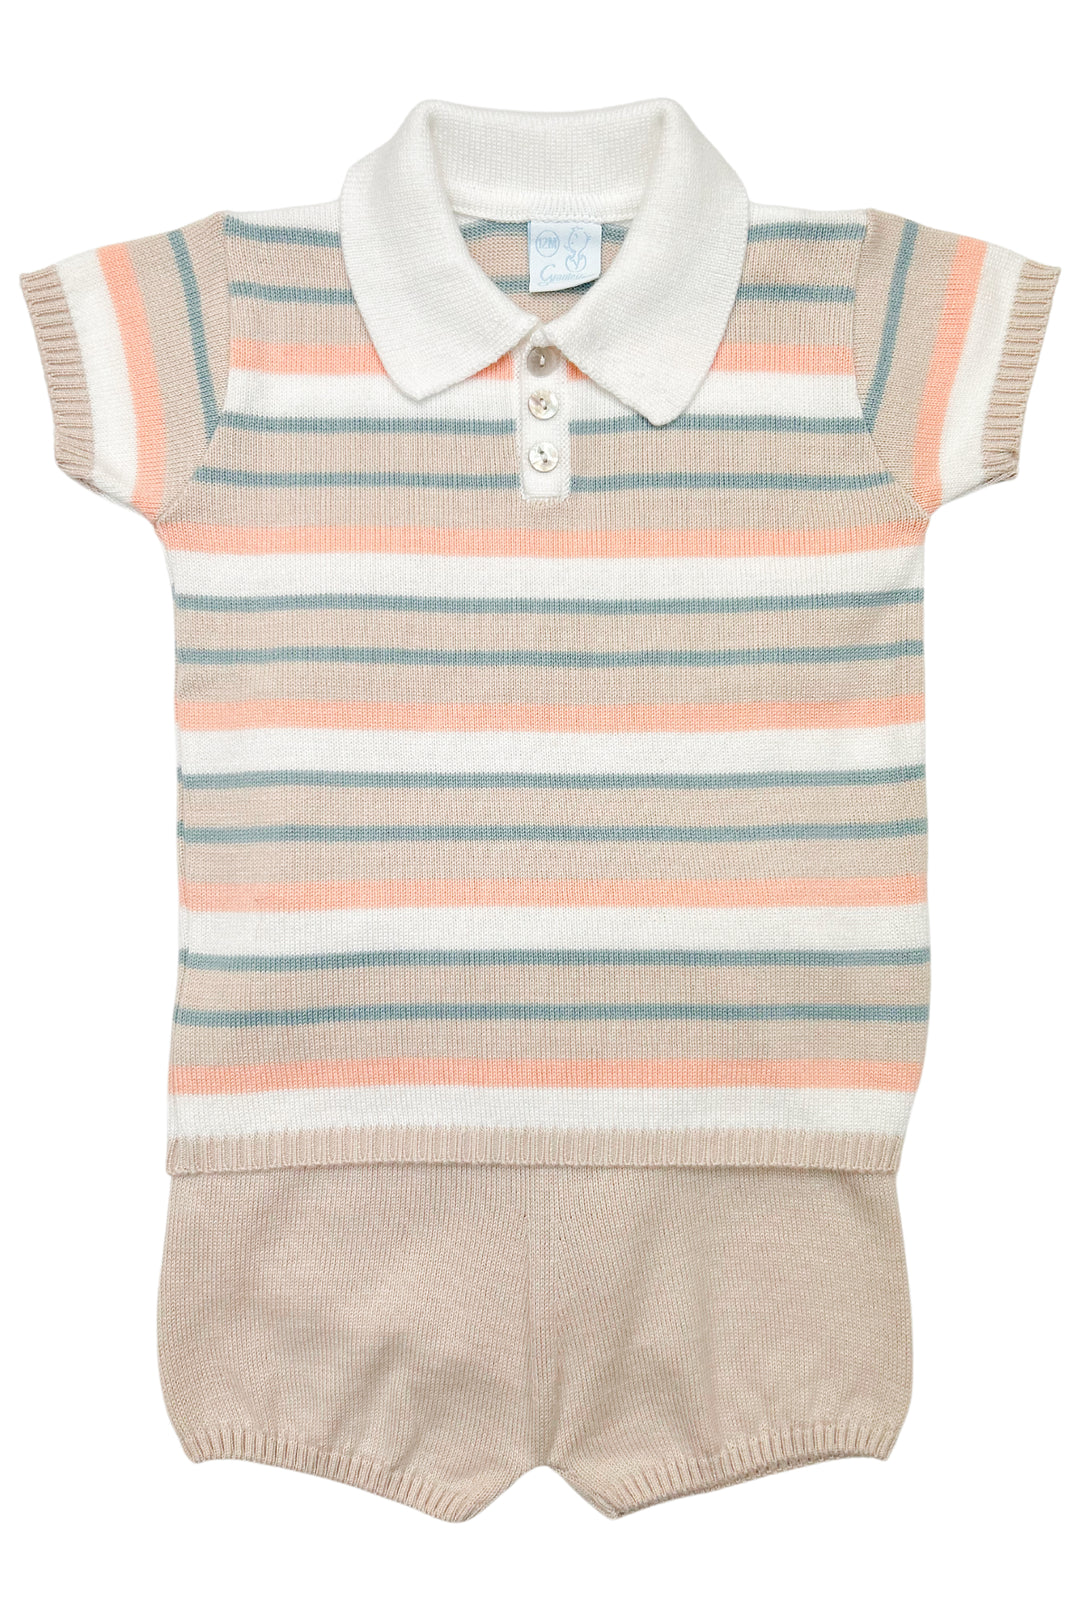 Granlei "Jude" Stone, Peach & Teal Stripe Knit Top & Shorts | Millie and John